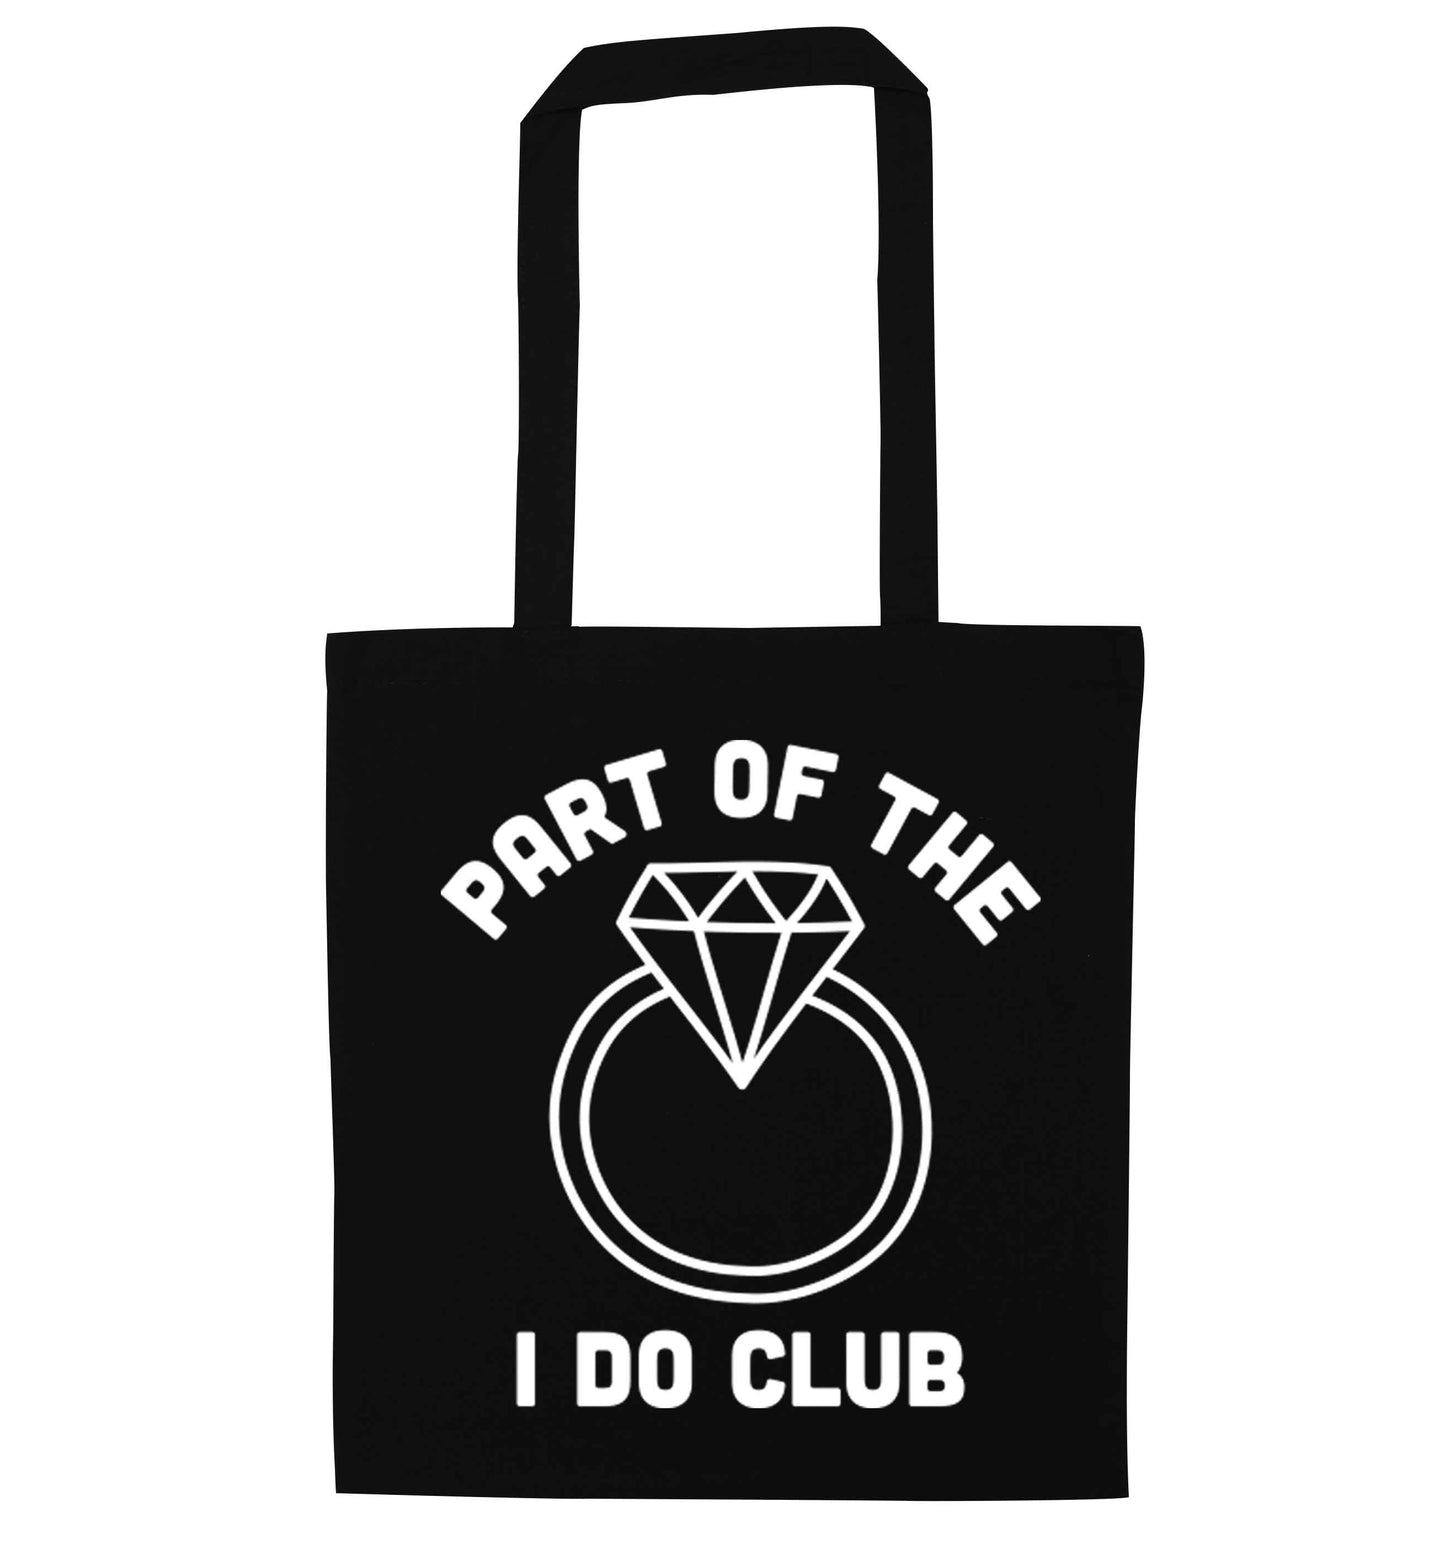 Part of the I do club black tote bag